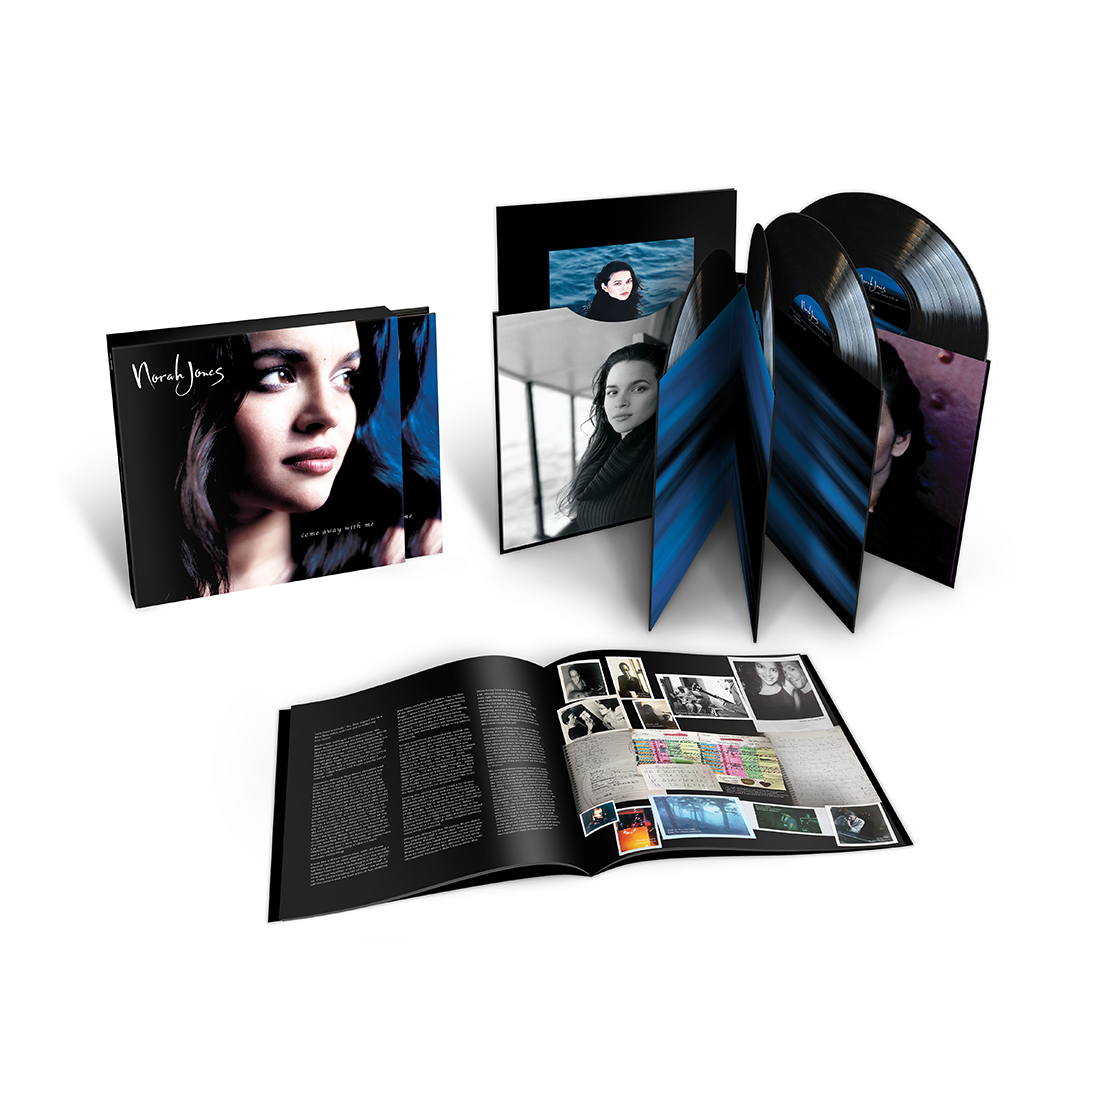 Norah Jones - Vinyl & CDs - Blue Note Records